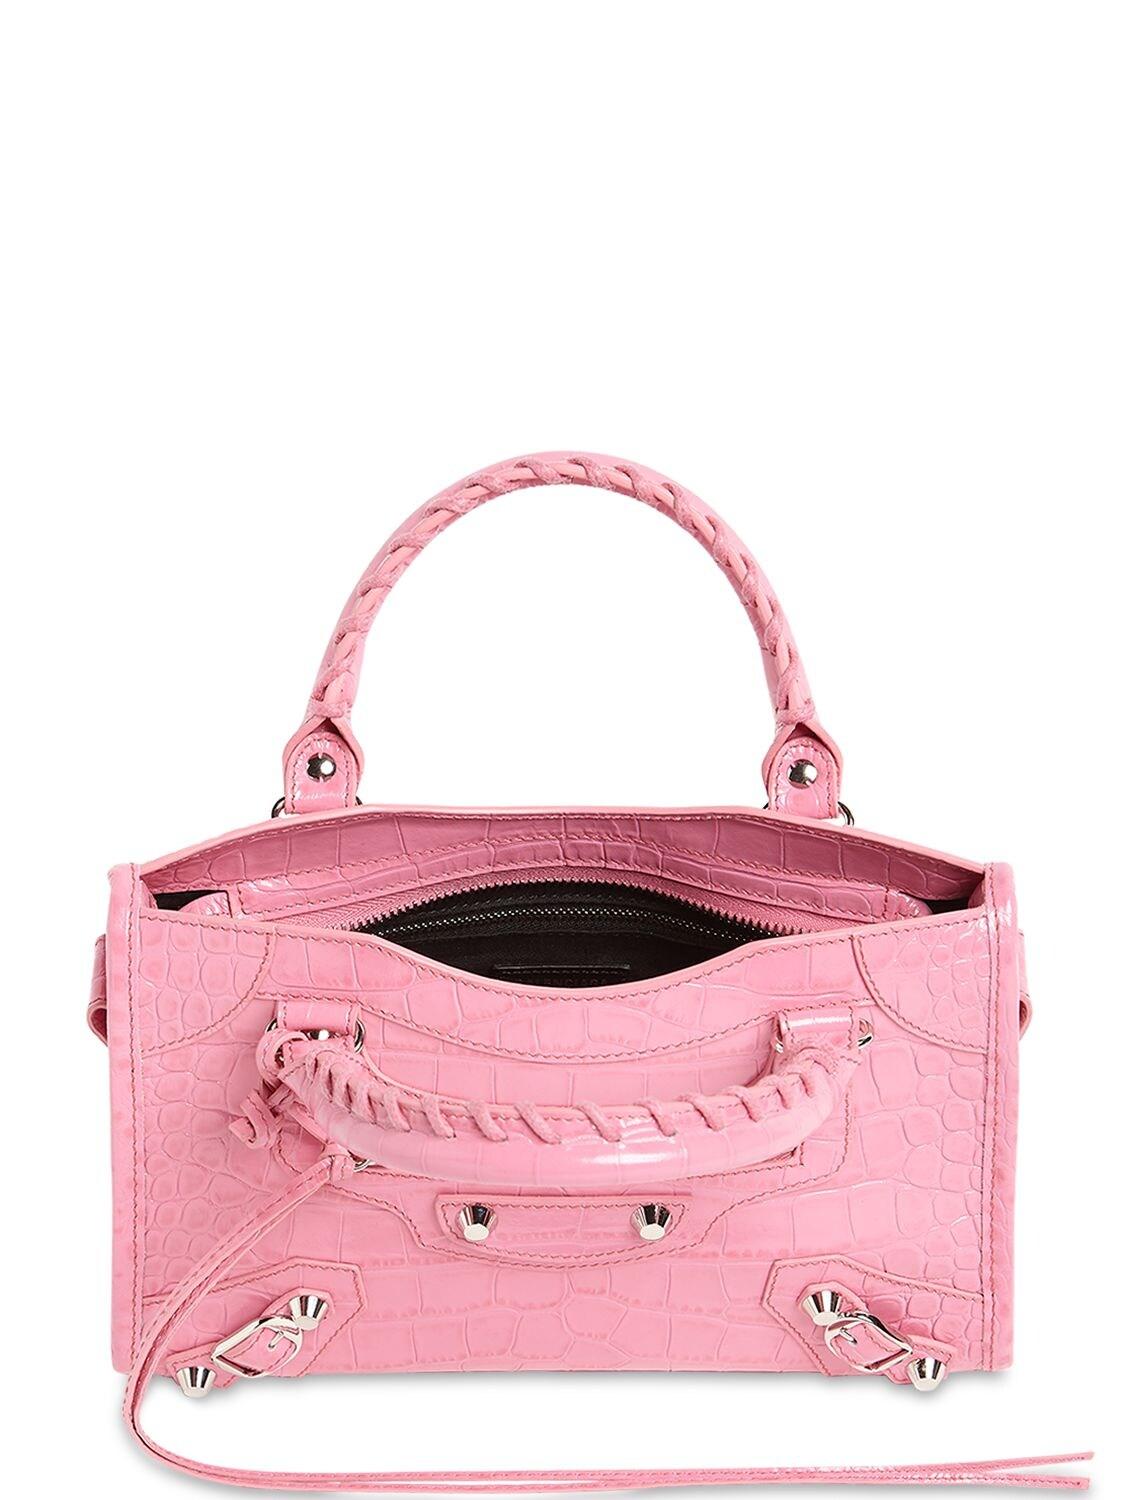 Balenciaga Hot Pink Leather Mini Classic City Bag - BOPF